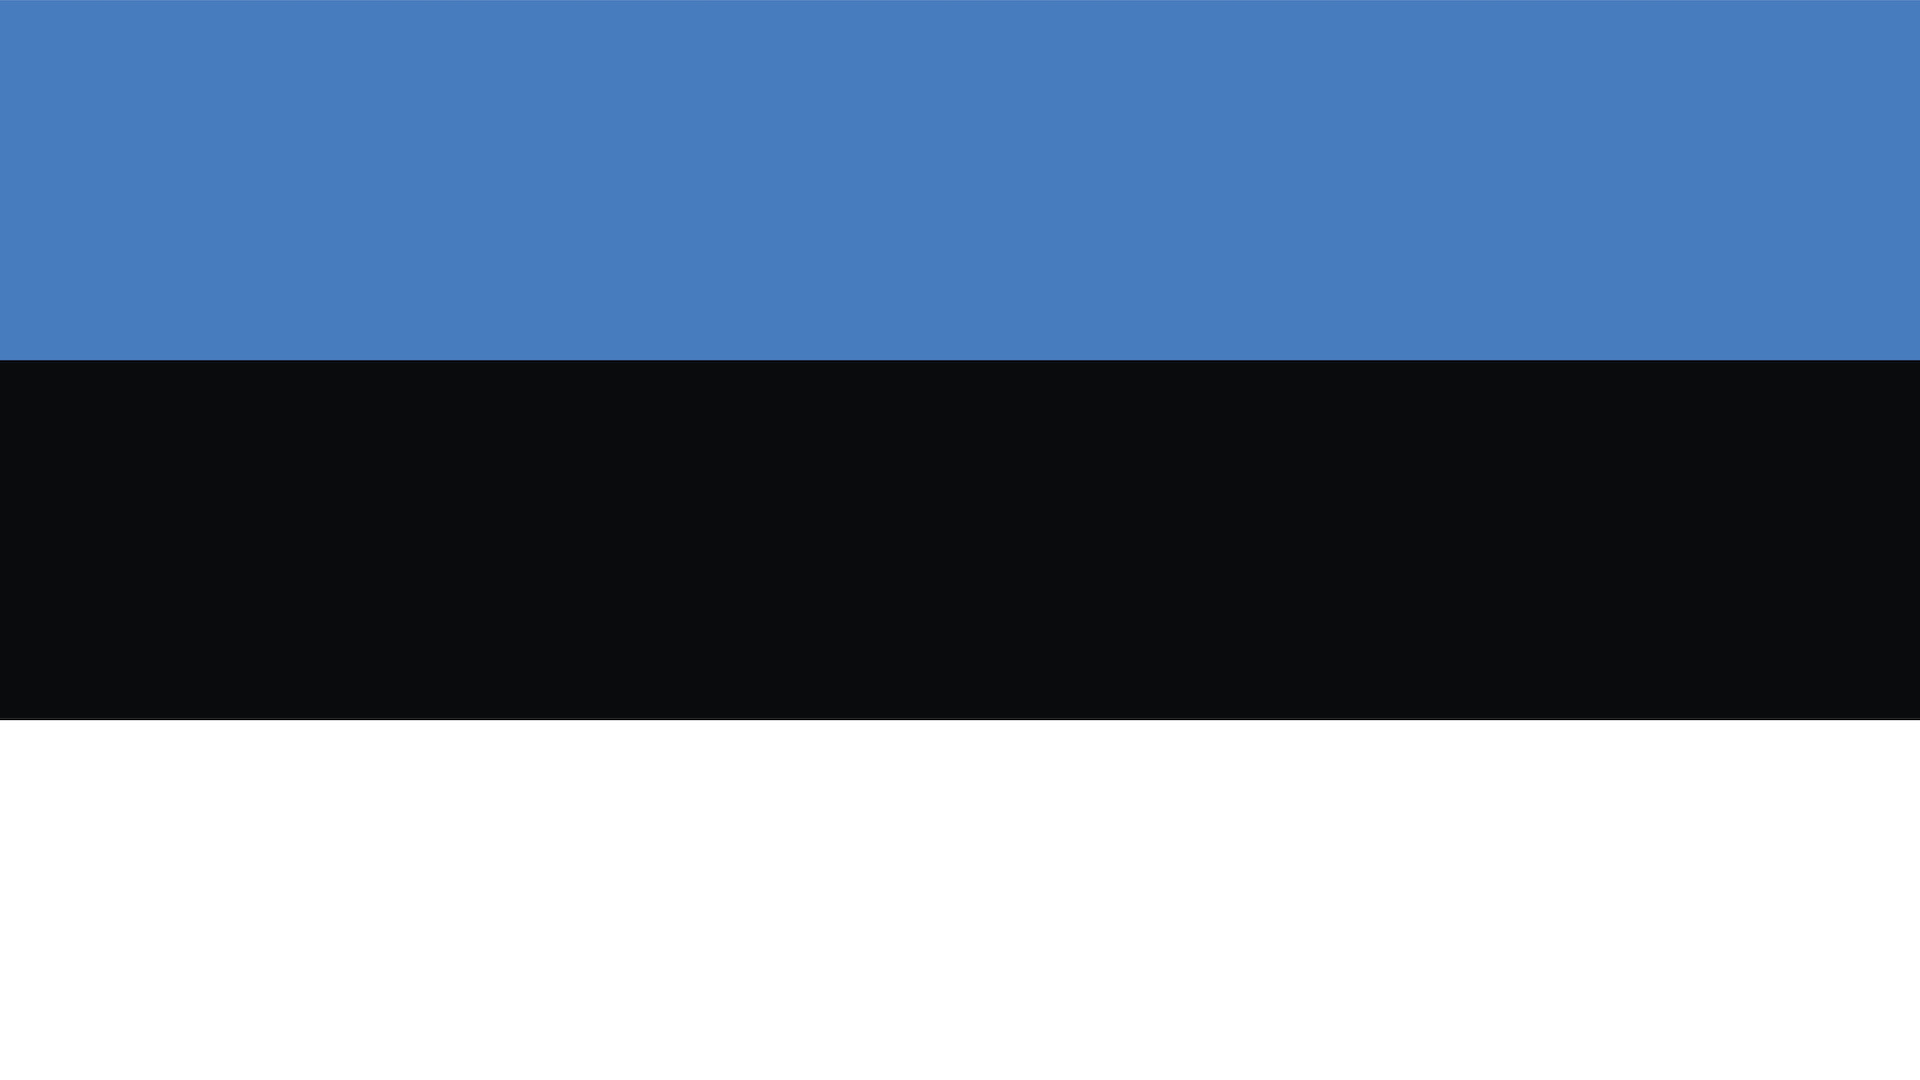 white flag with blue stripes